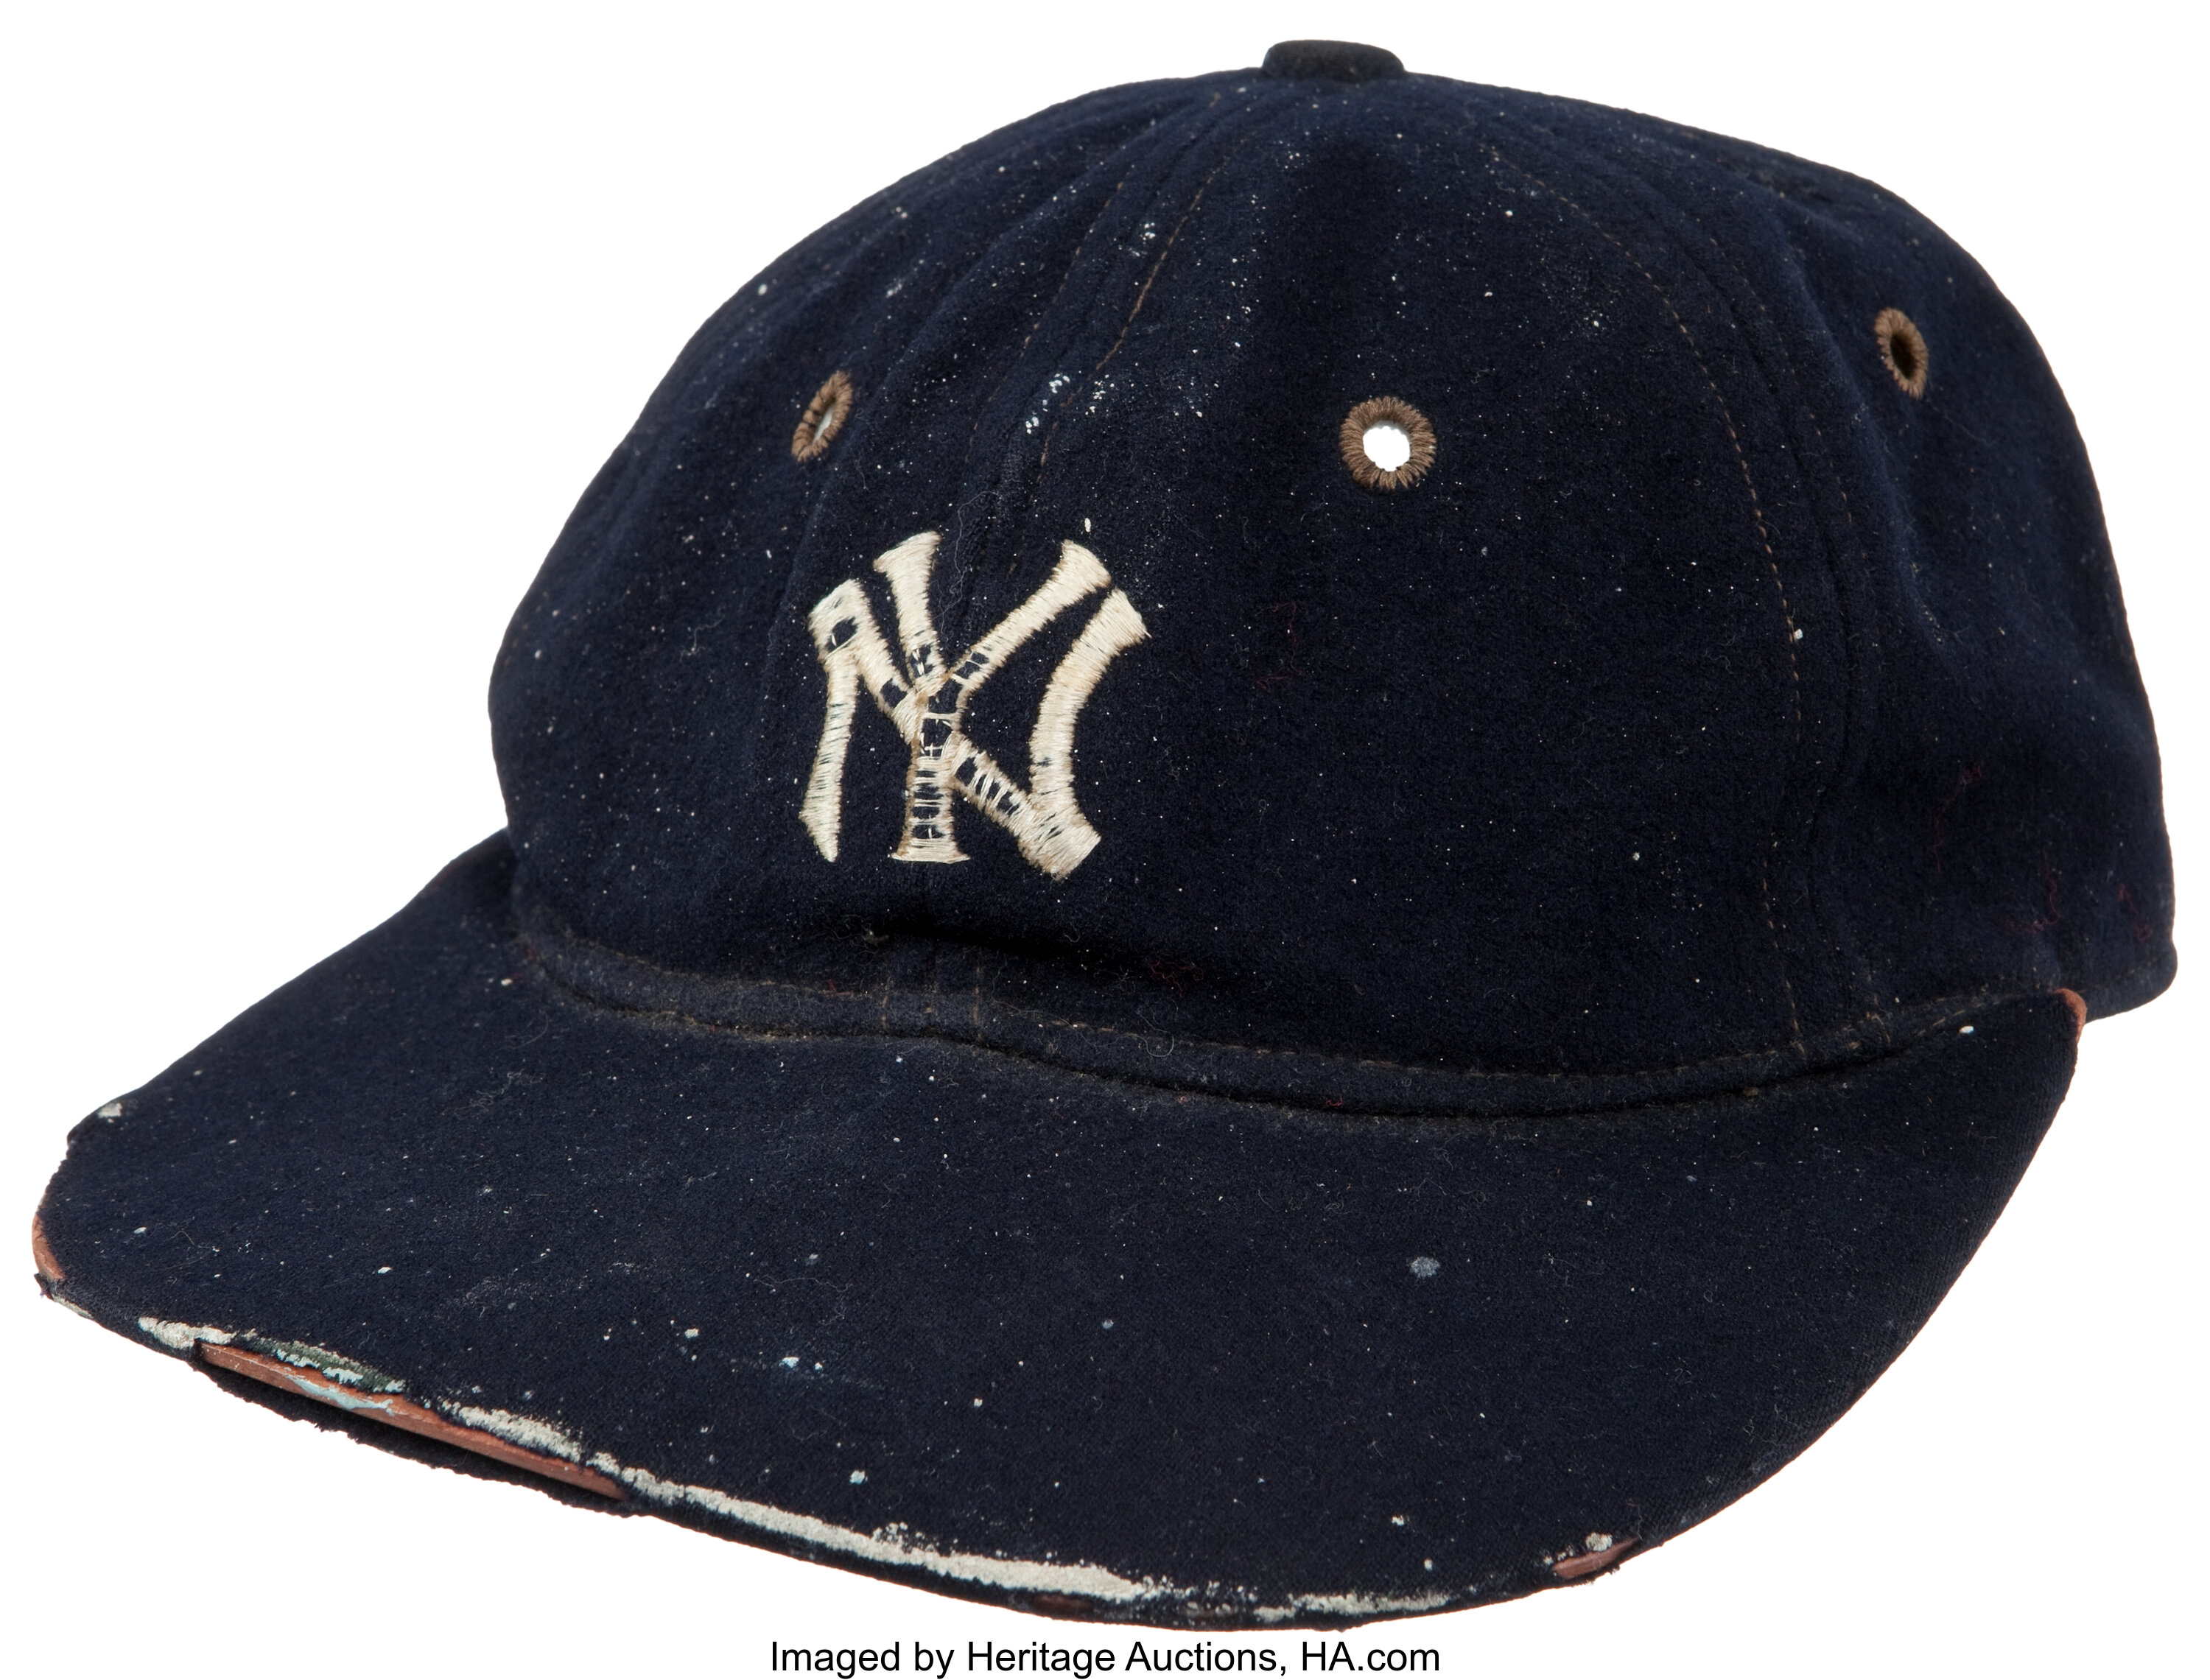 Circa 1932 Babe Ruth Game Worn New York Yankees Cap. Baseball